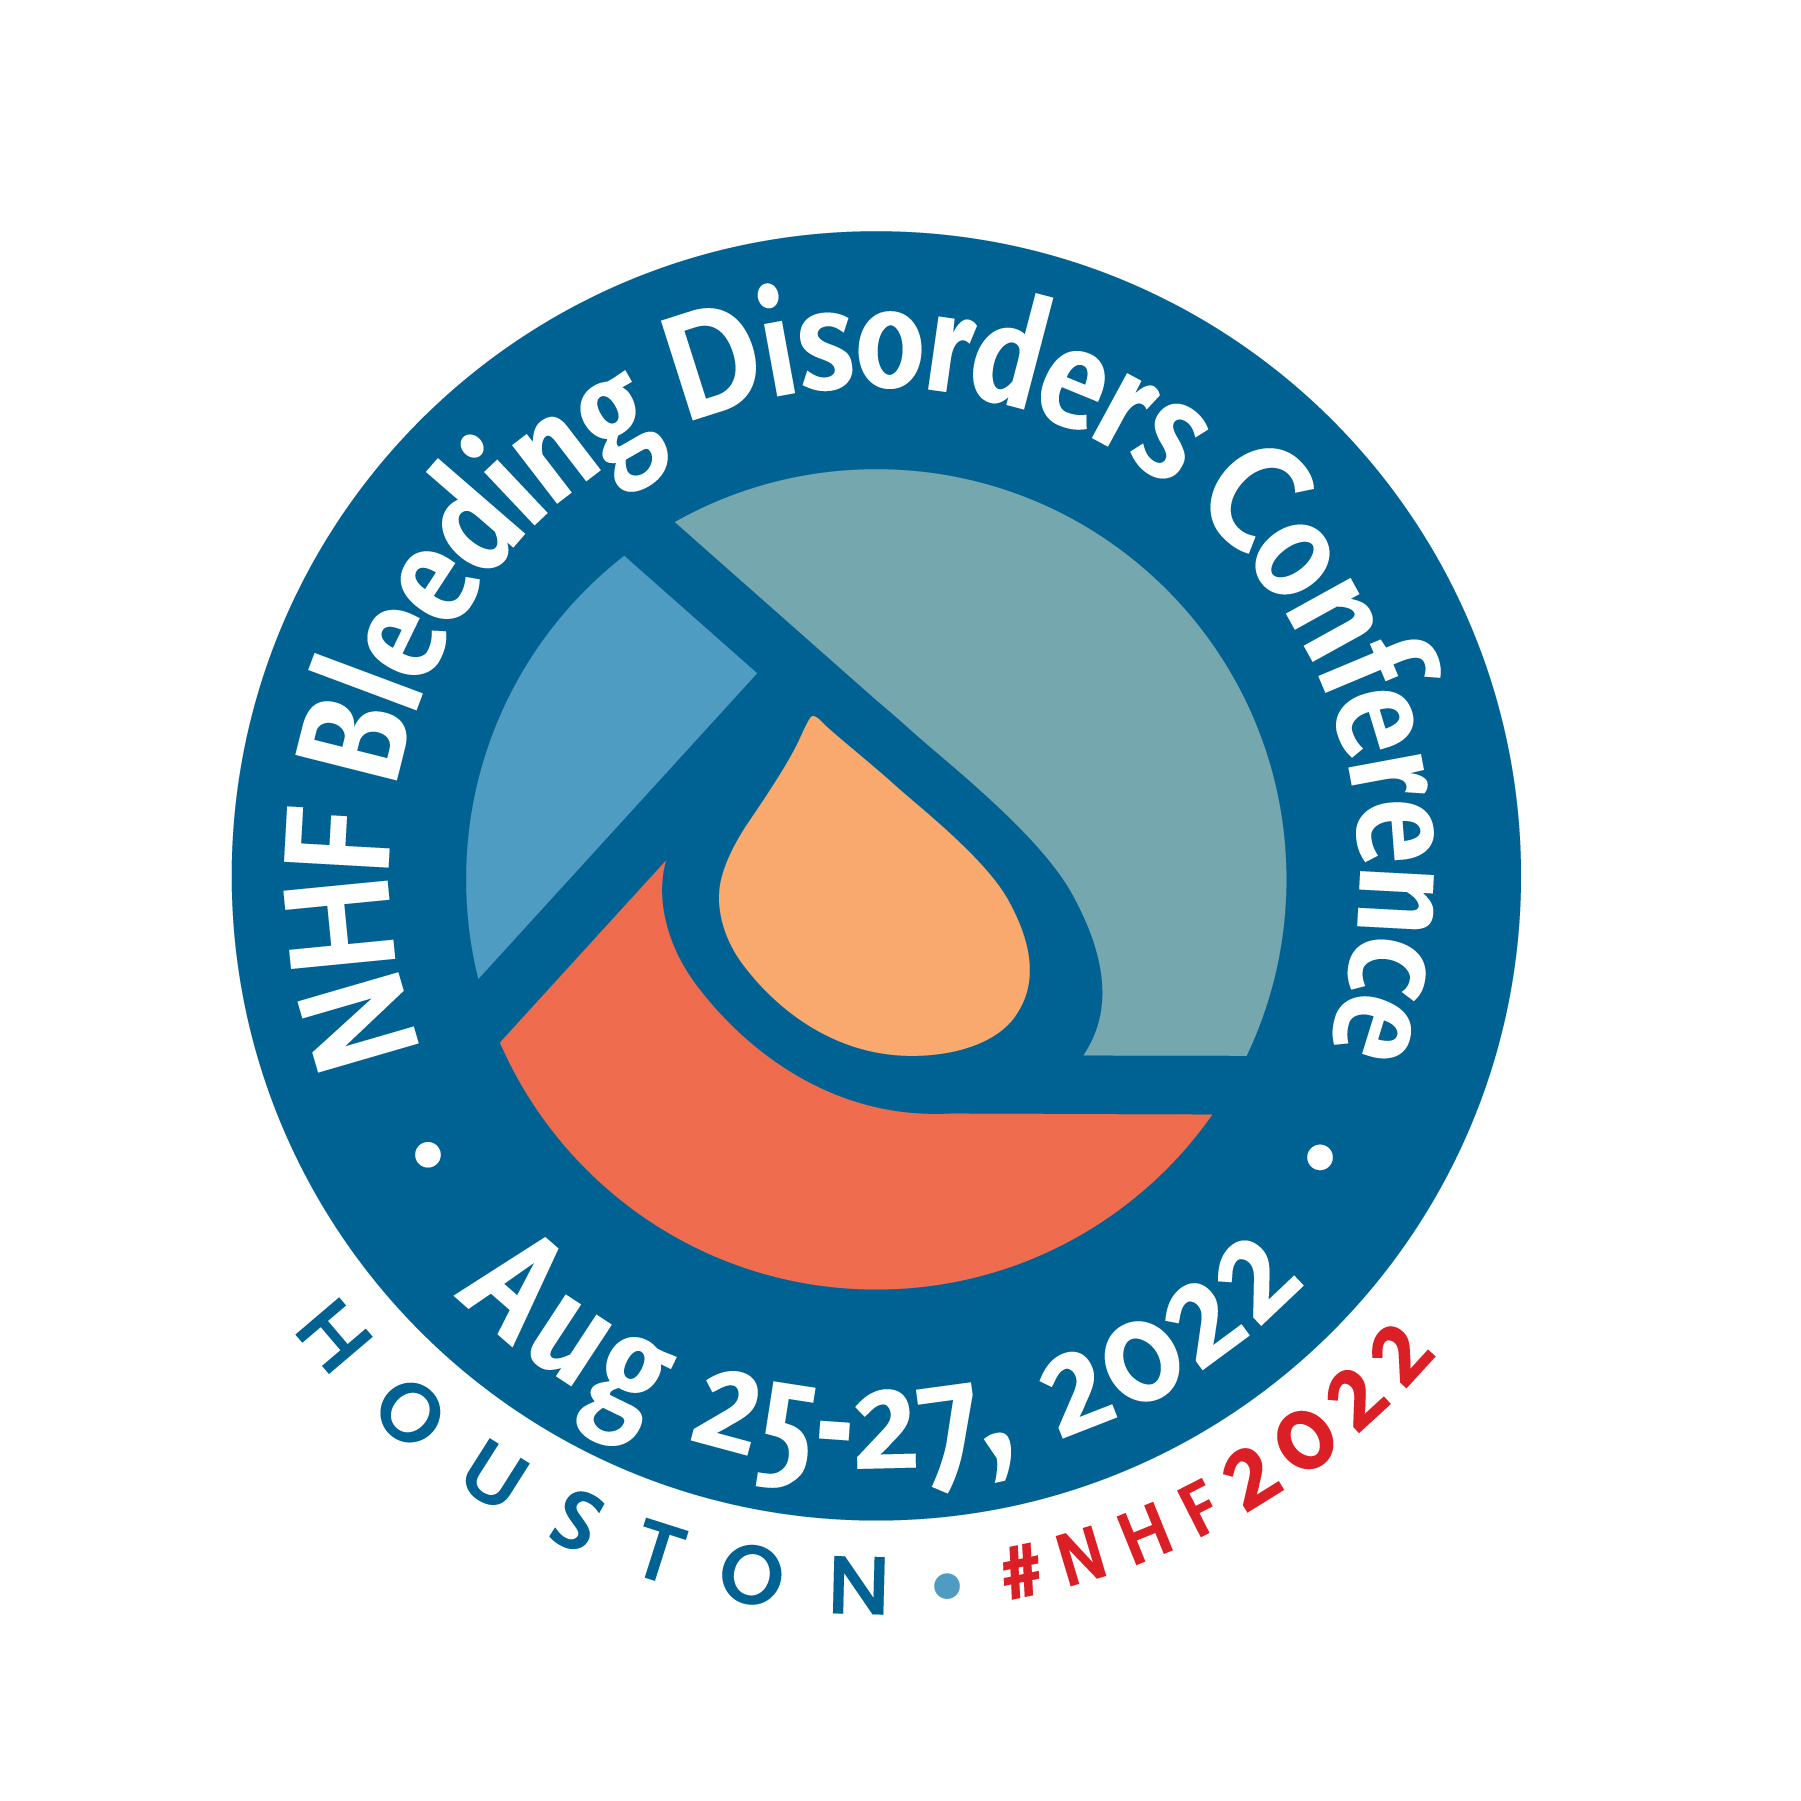 2022 Houston Bleeding Disorders Conference logo